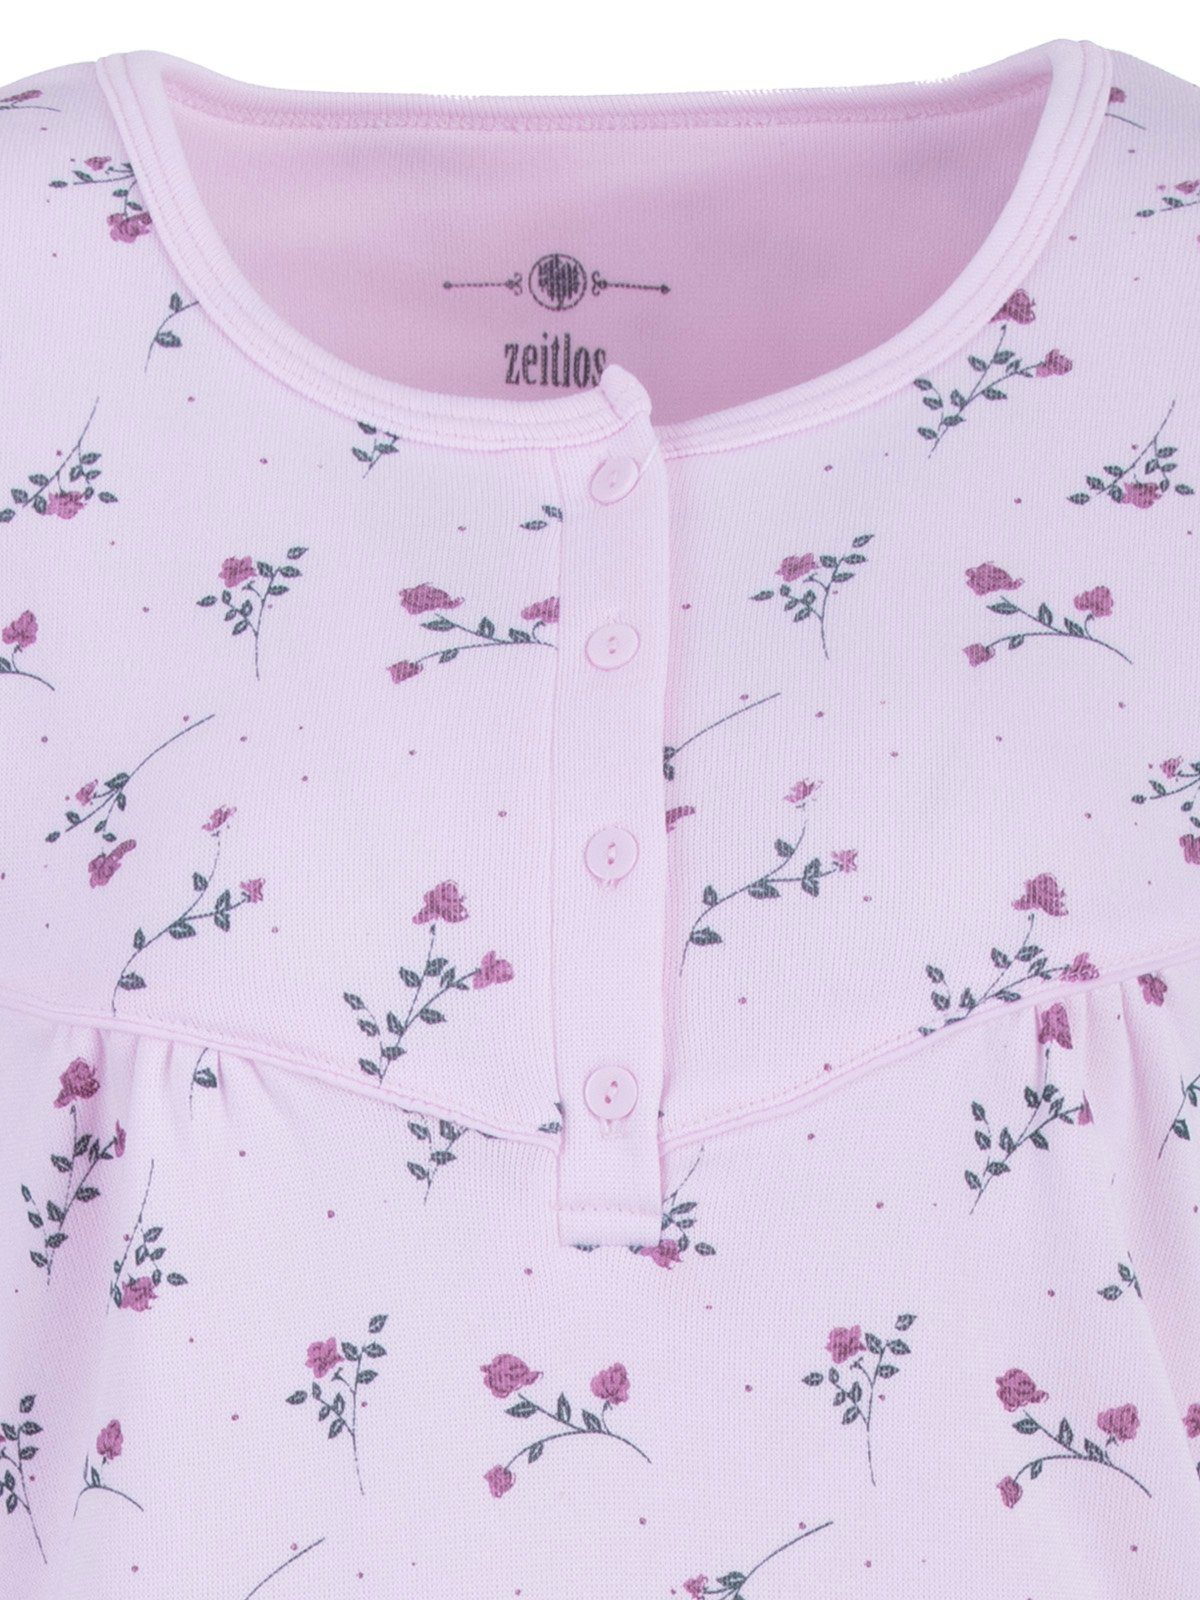 zeitlos Nachthemd Thermo Nachthemd - Paspel Blumen rosa